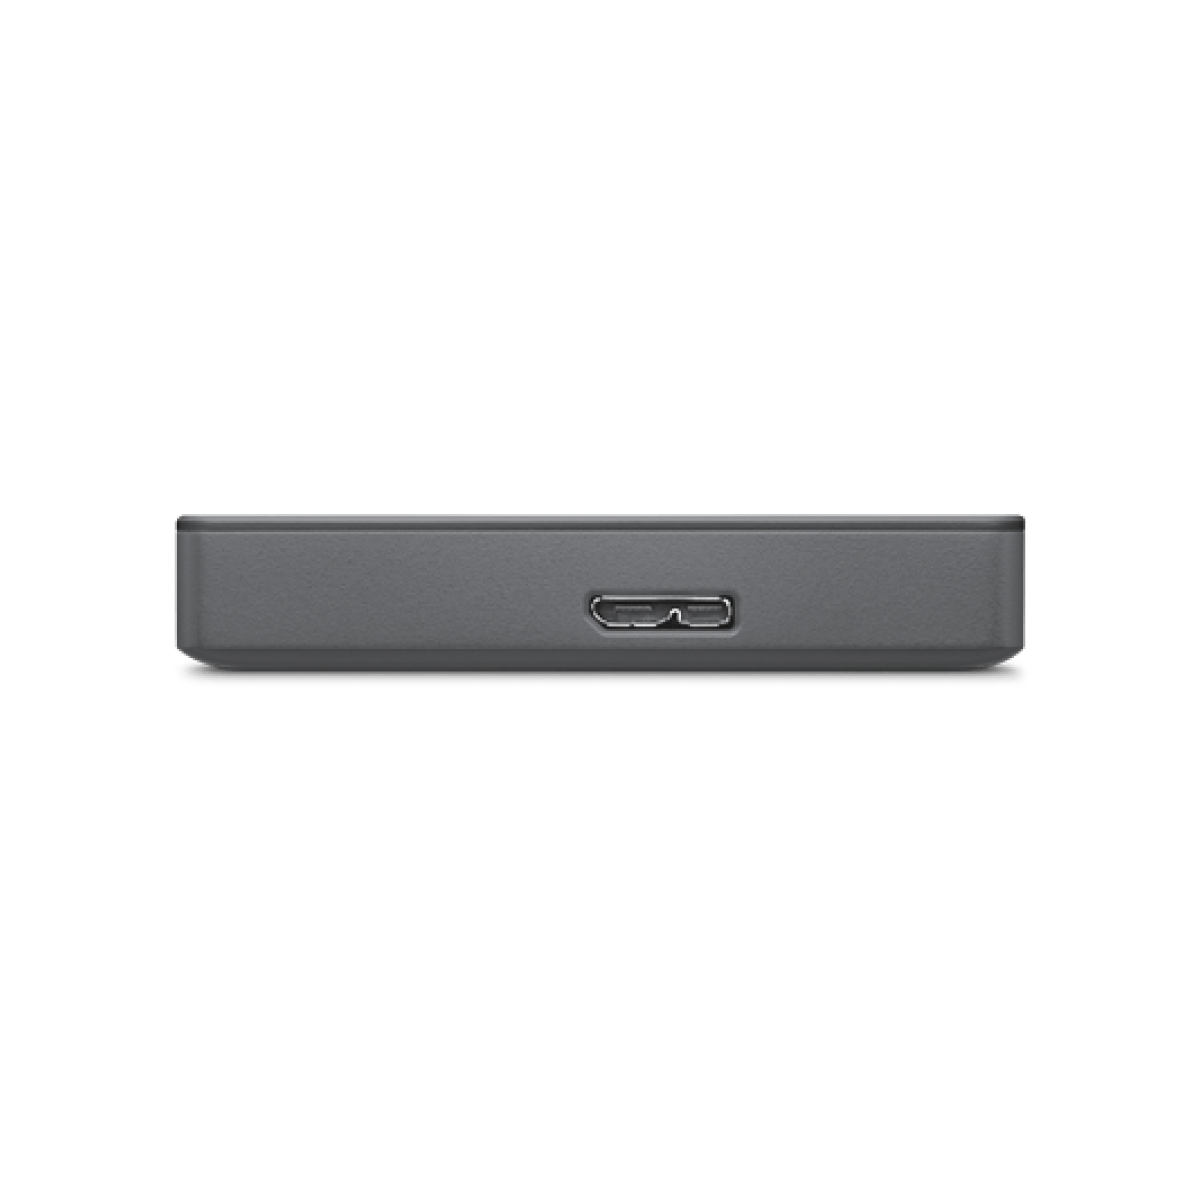 Disque dur externe Seagate Disque dur externe Special Edition, 5 To, USB  3.0 - Pour Mac, PC, Xbox One et PlayStation 4 (STGX5000400)